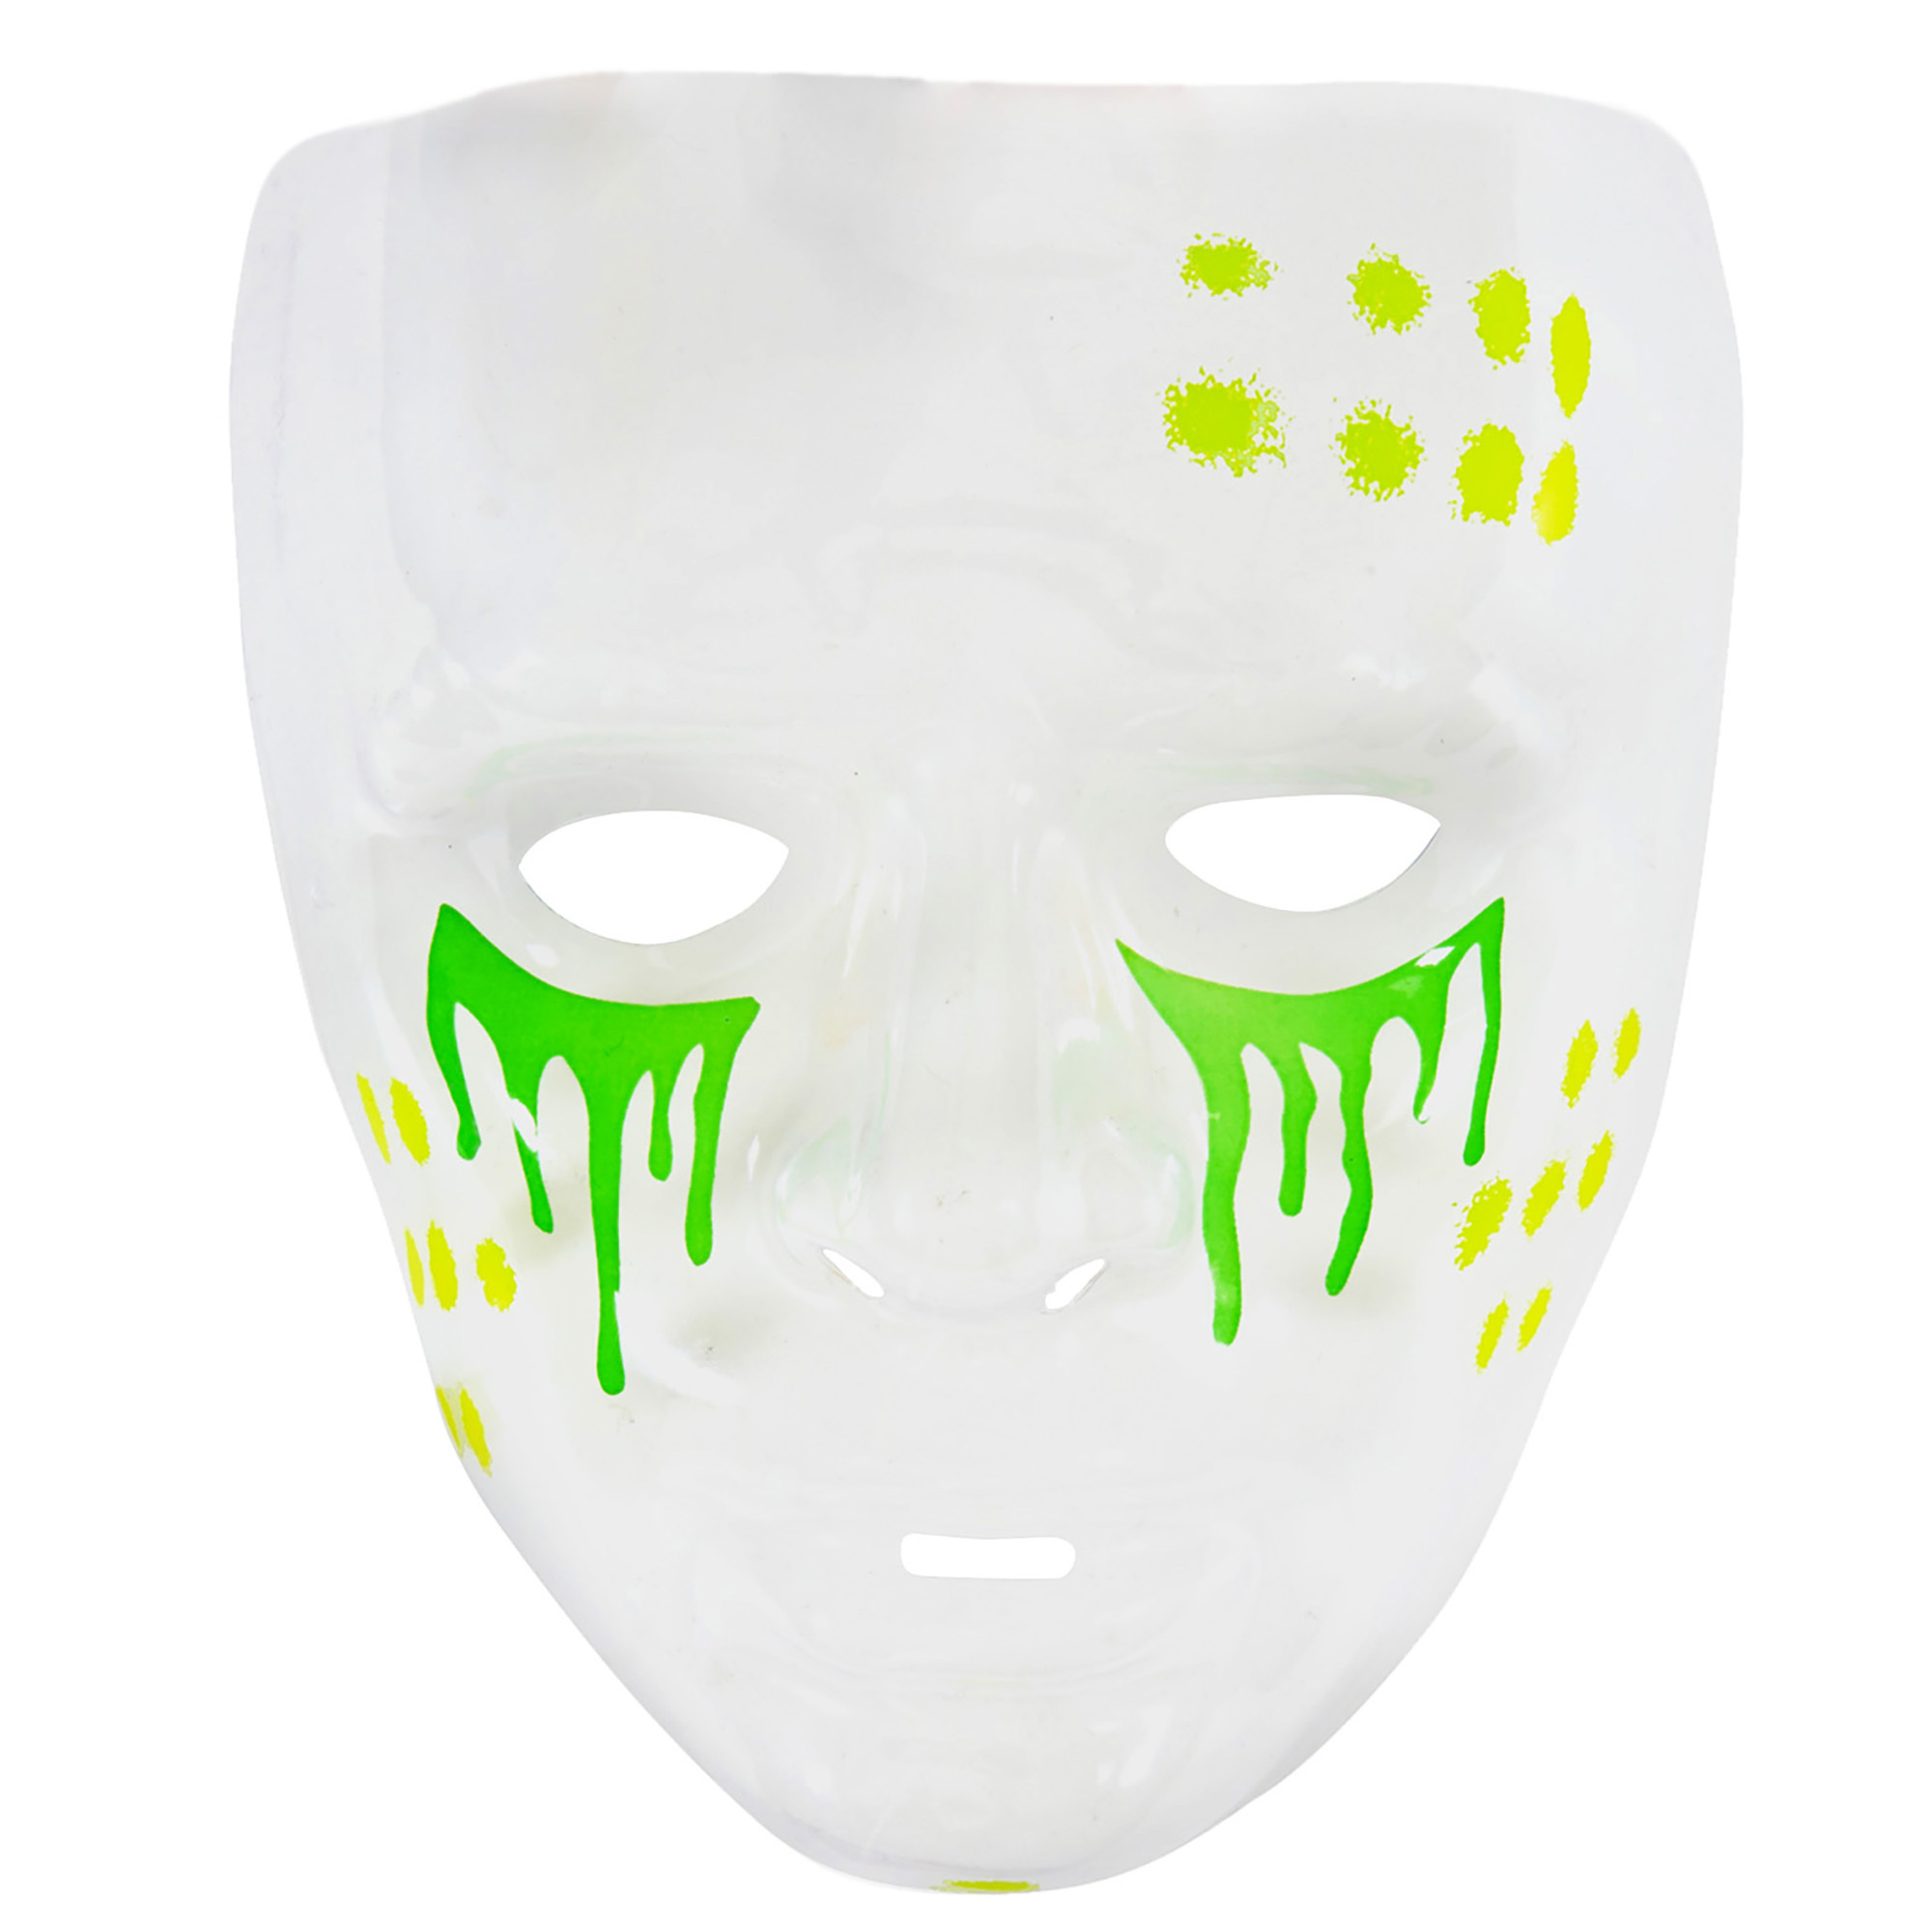 pvc masker transparant, giftige stoffen